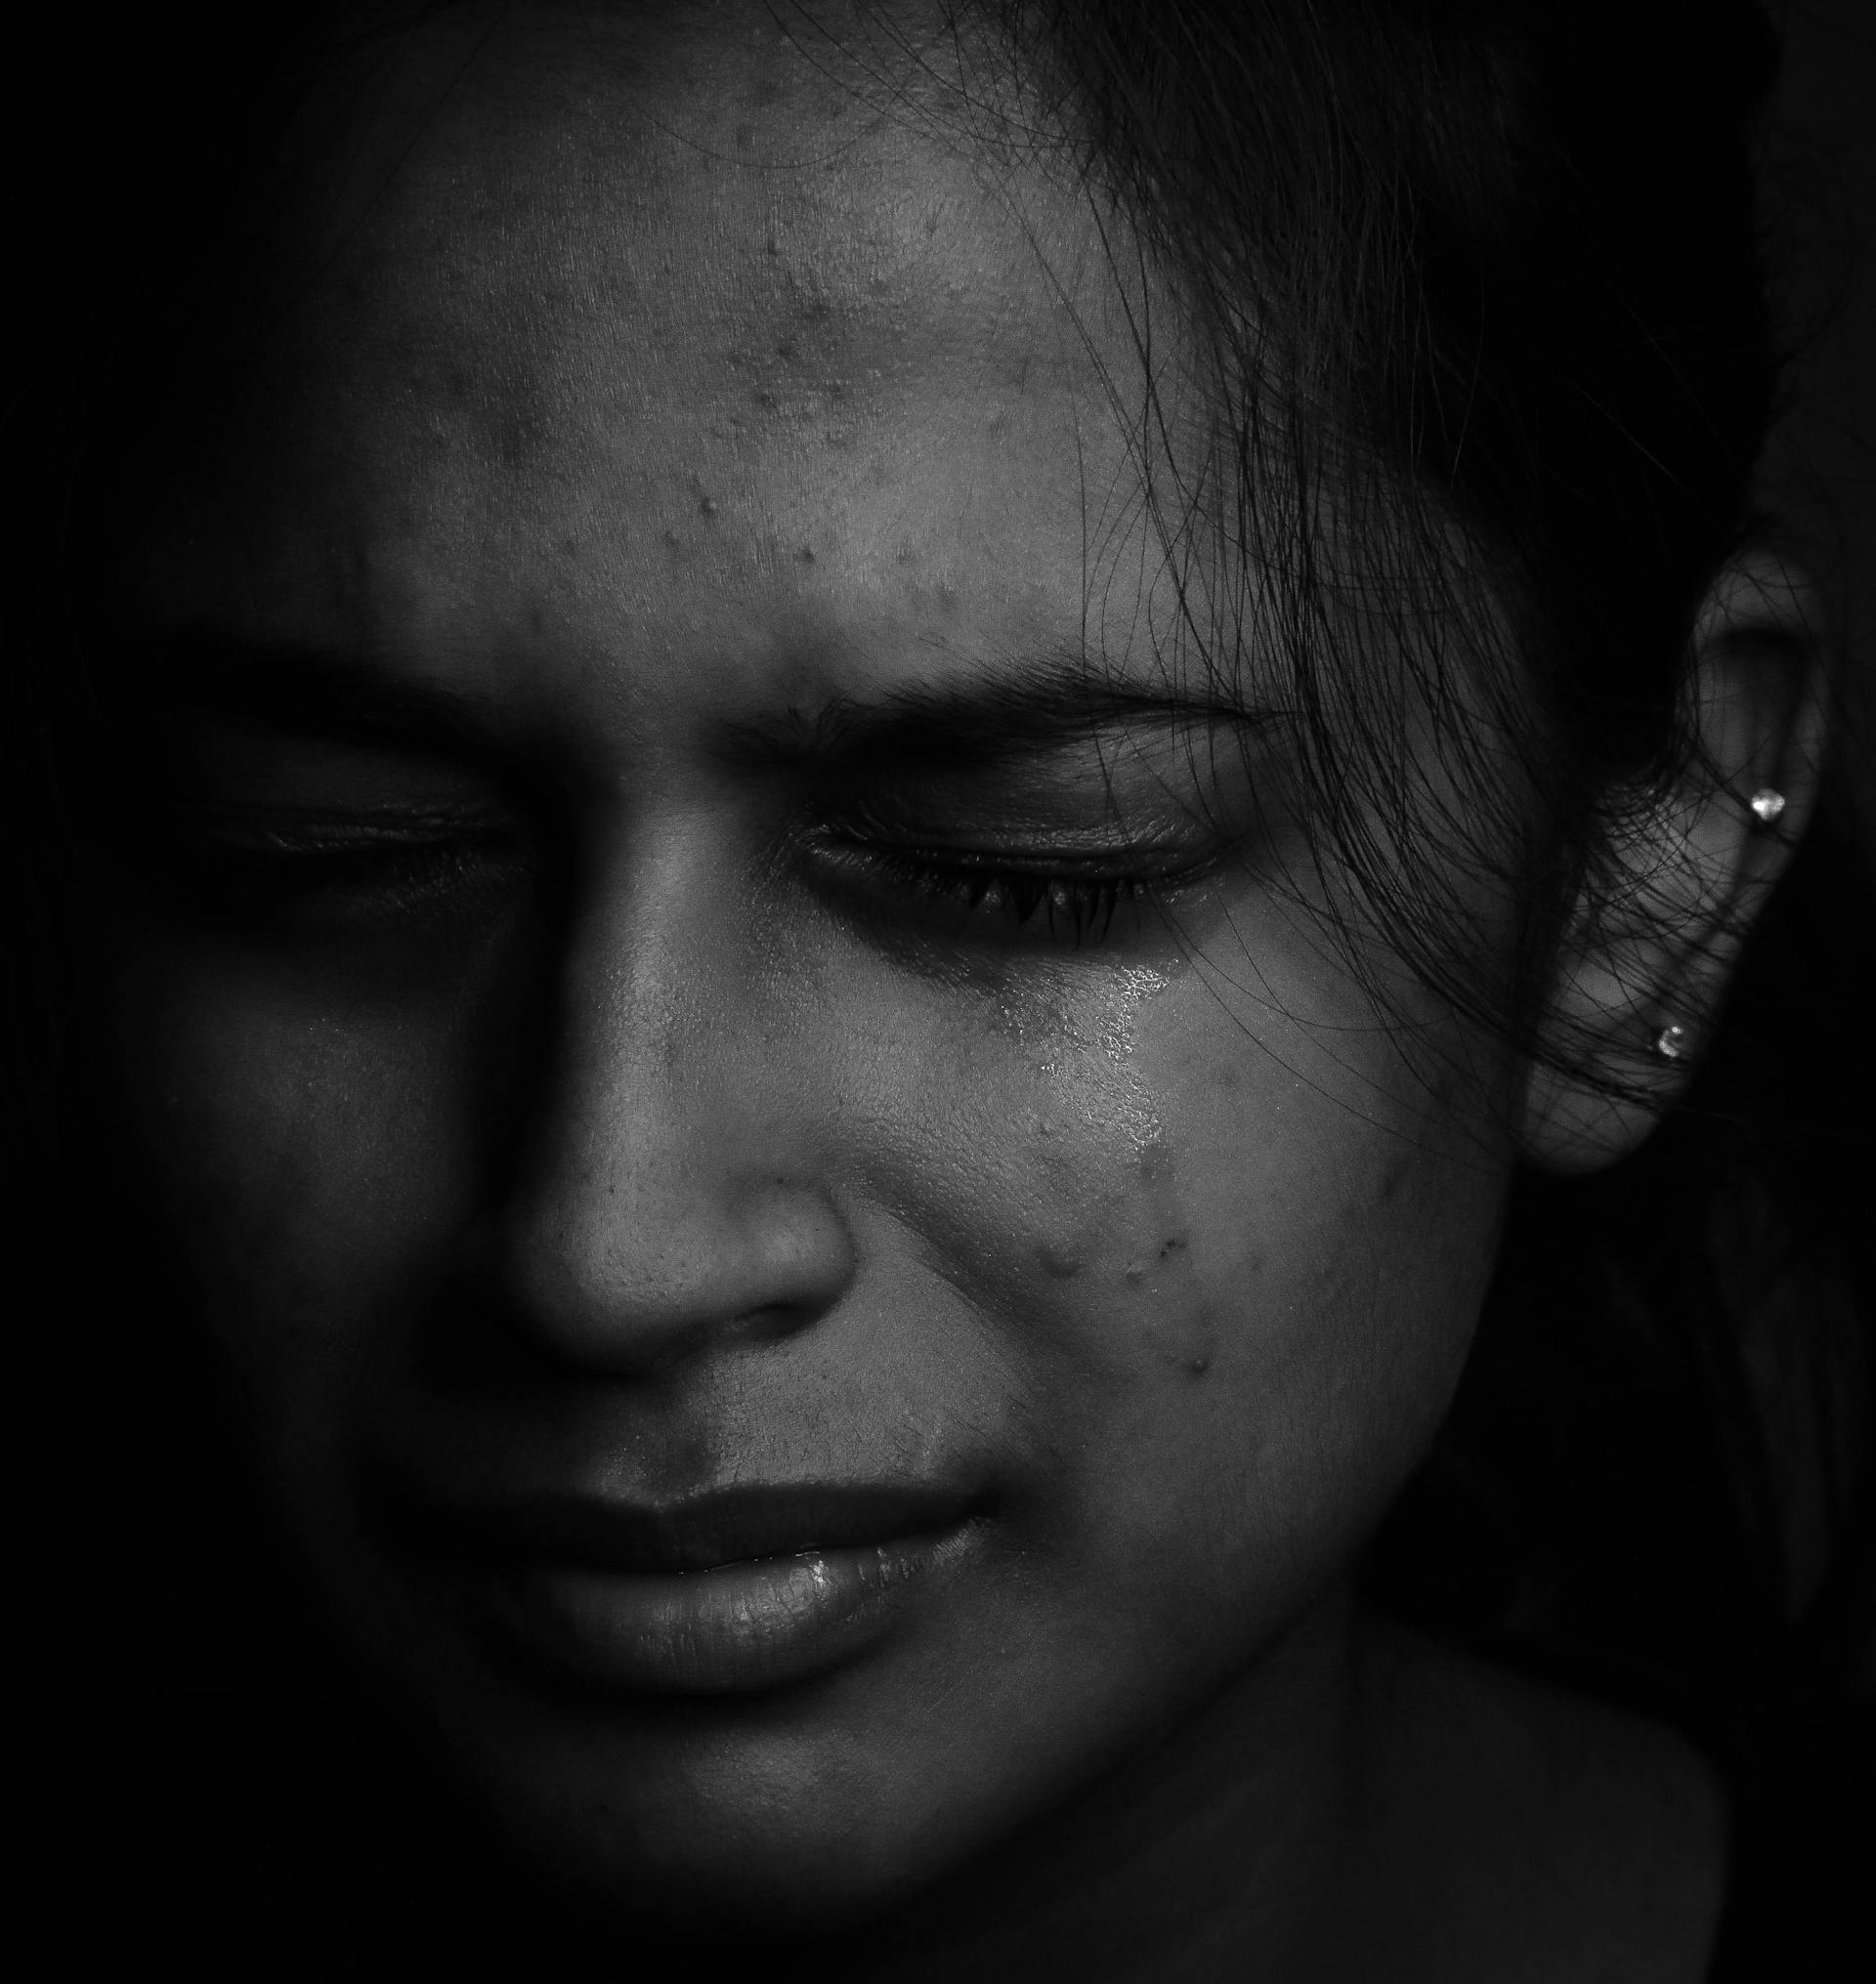 A heartbroken woman | Source: Pexels